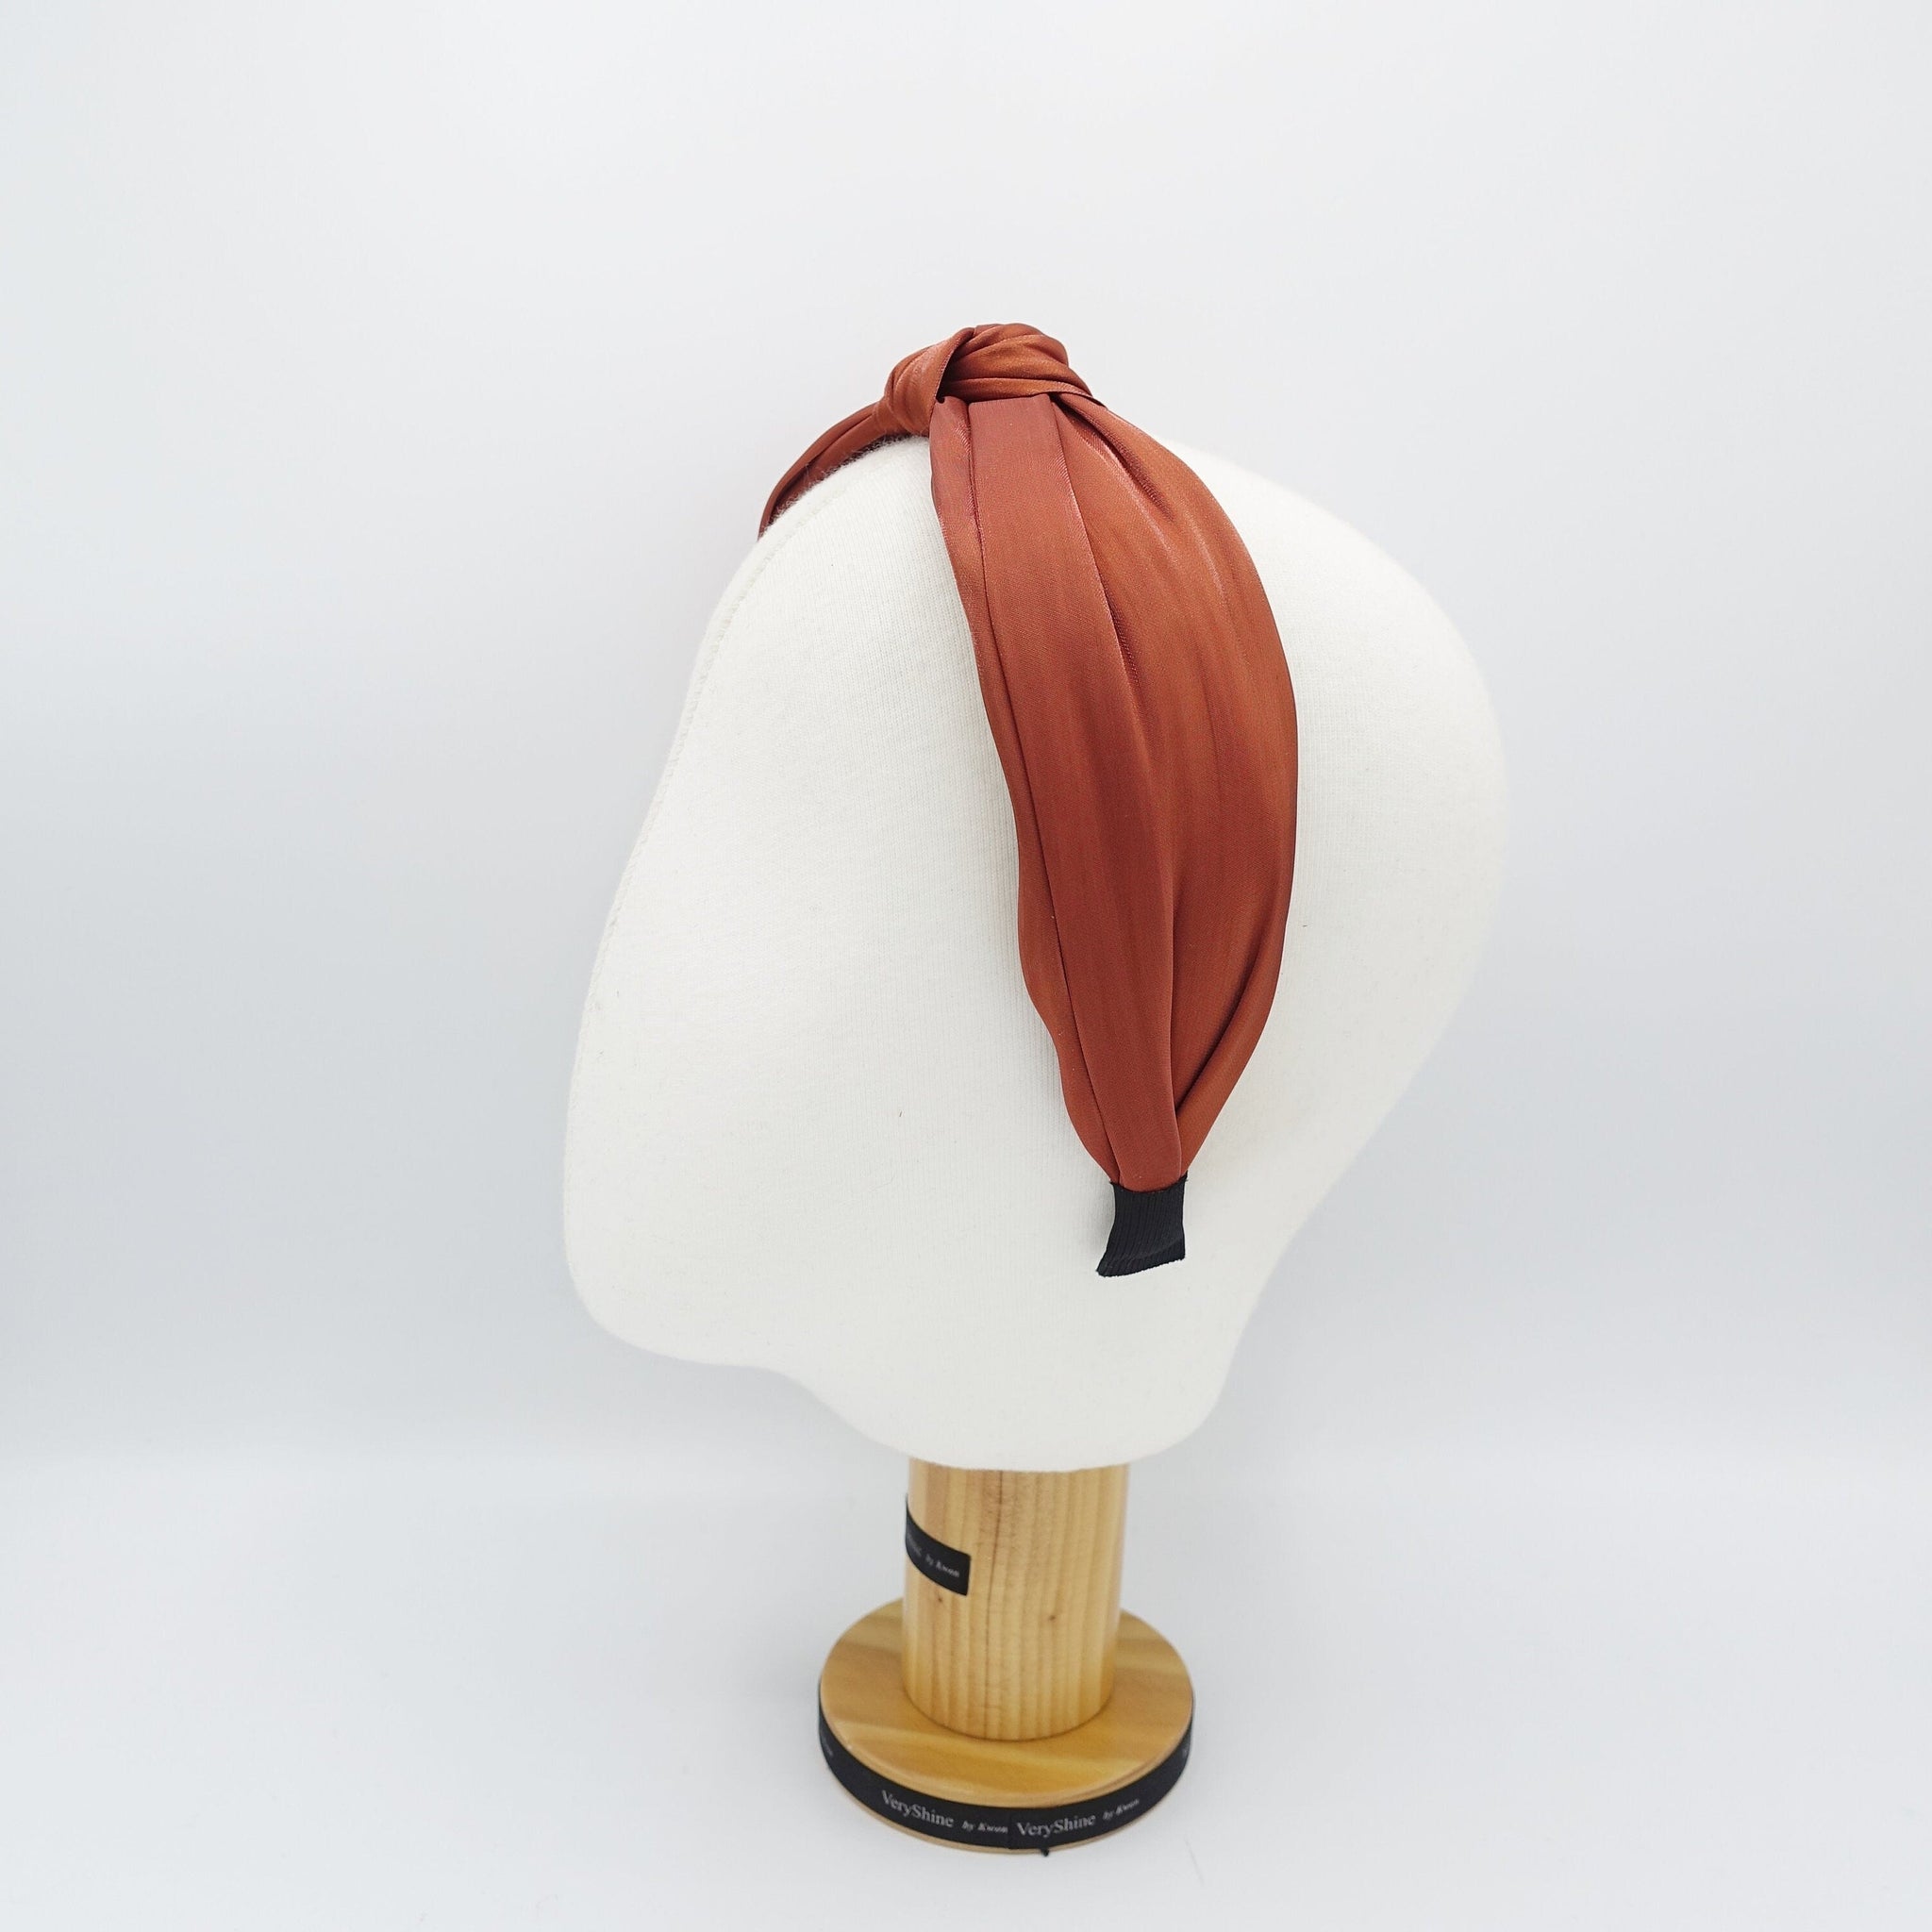 veryshine.com Headband high glossy organza headband knotted hairband women hair accessory